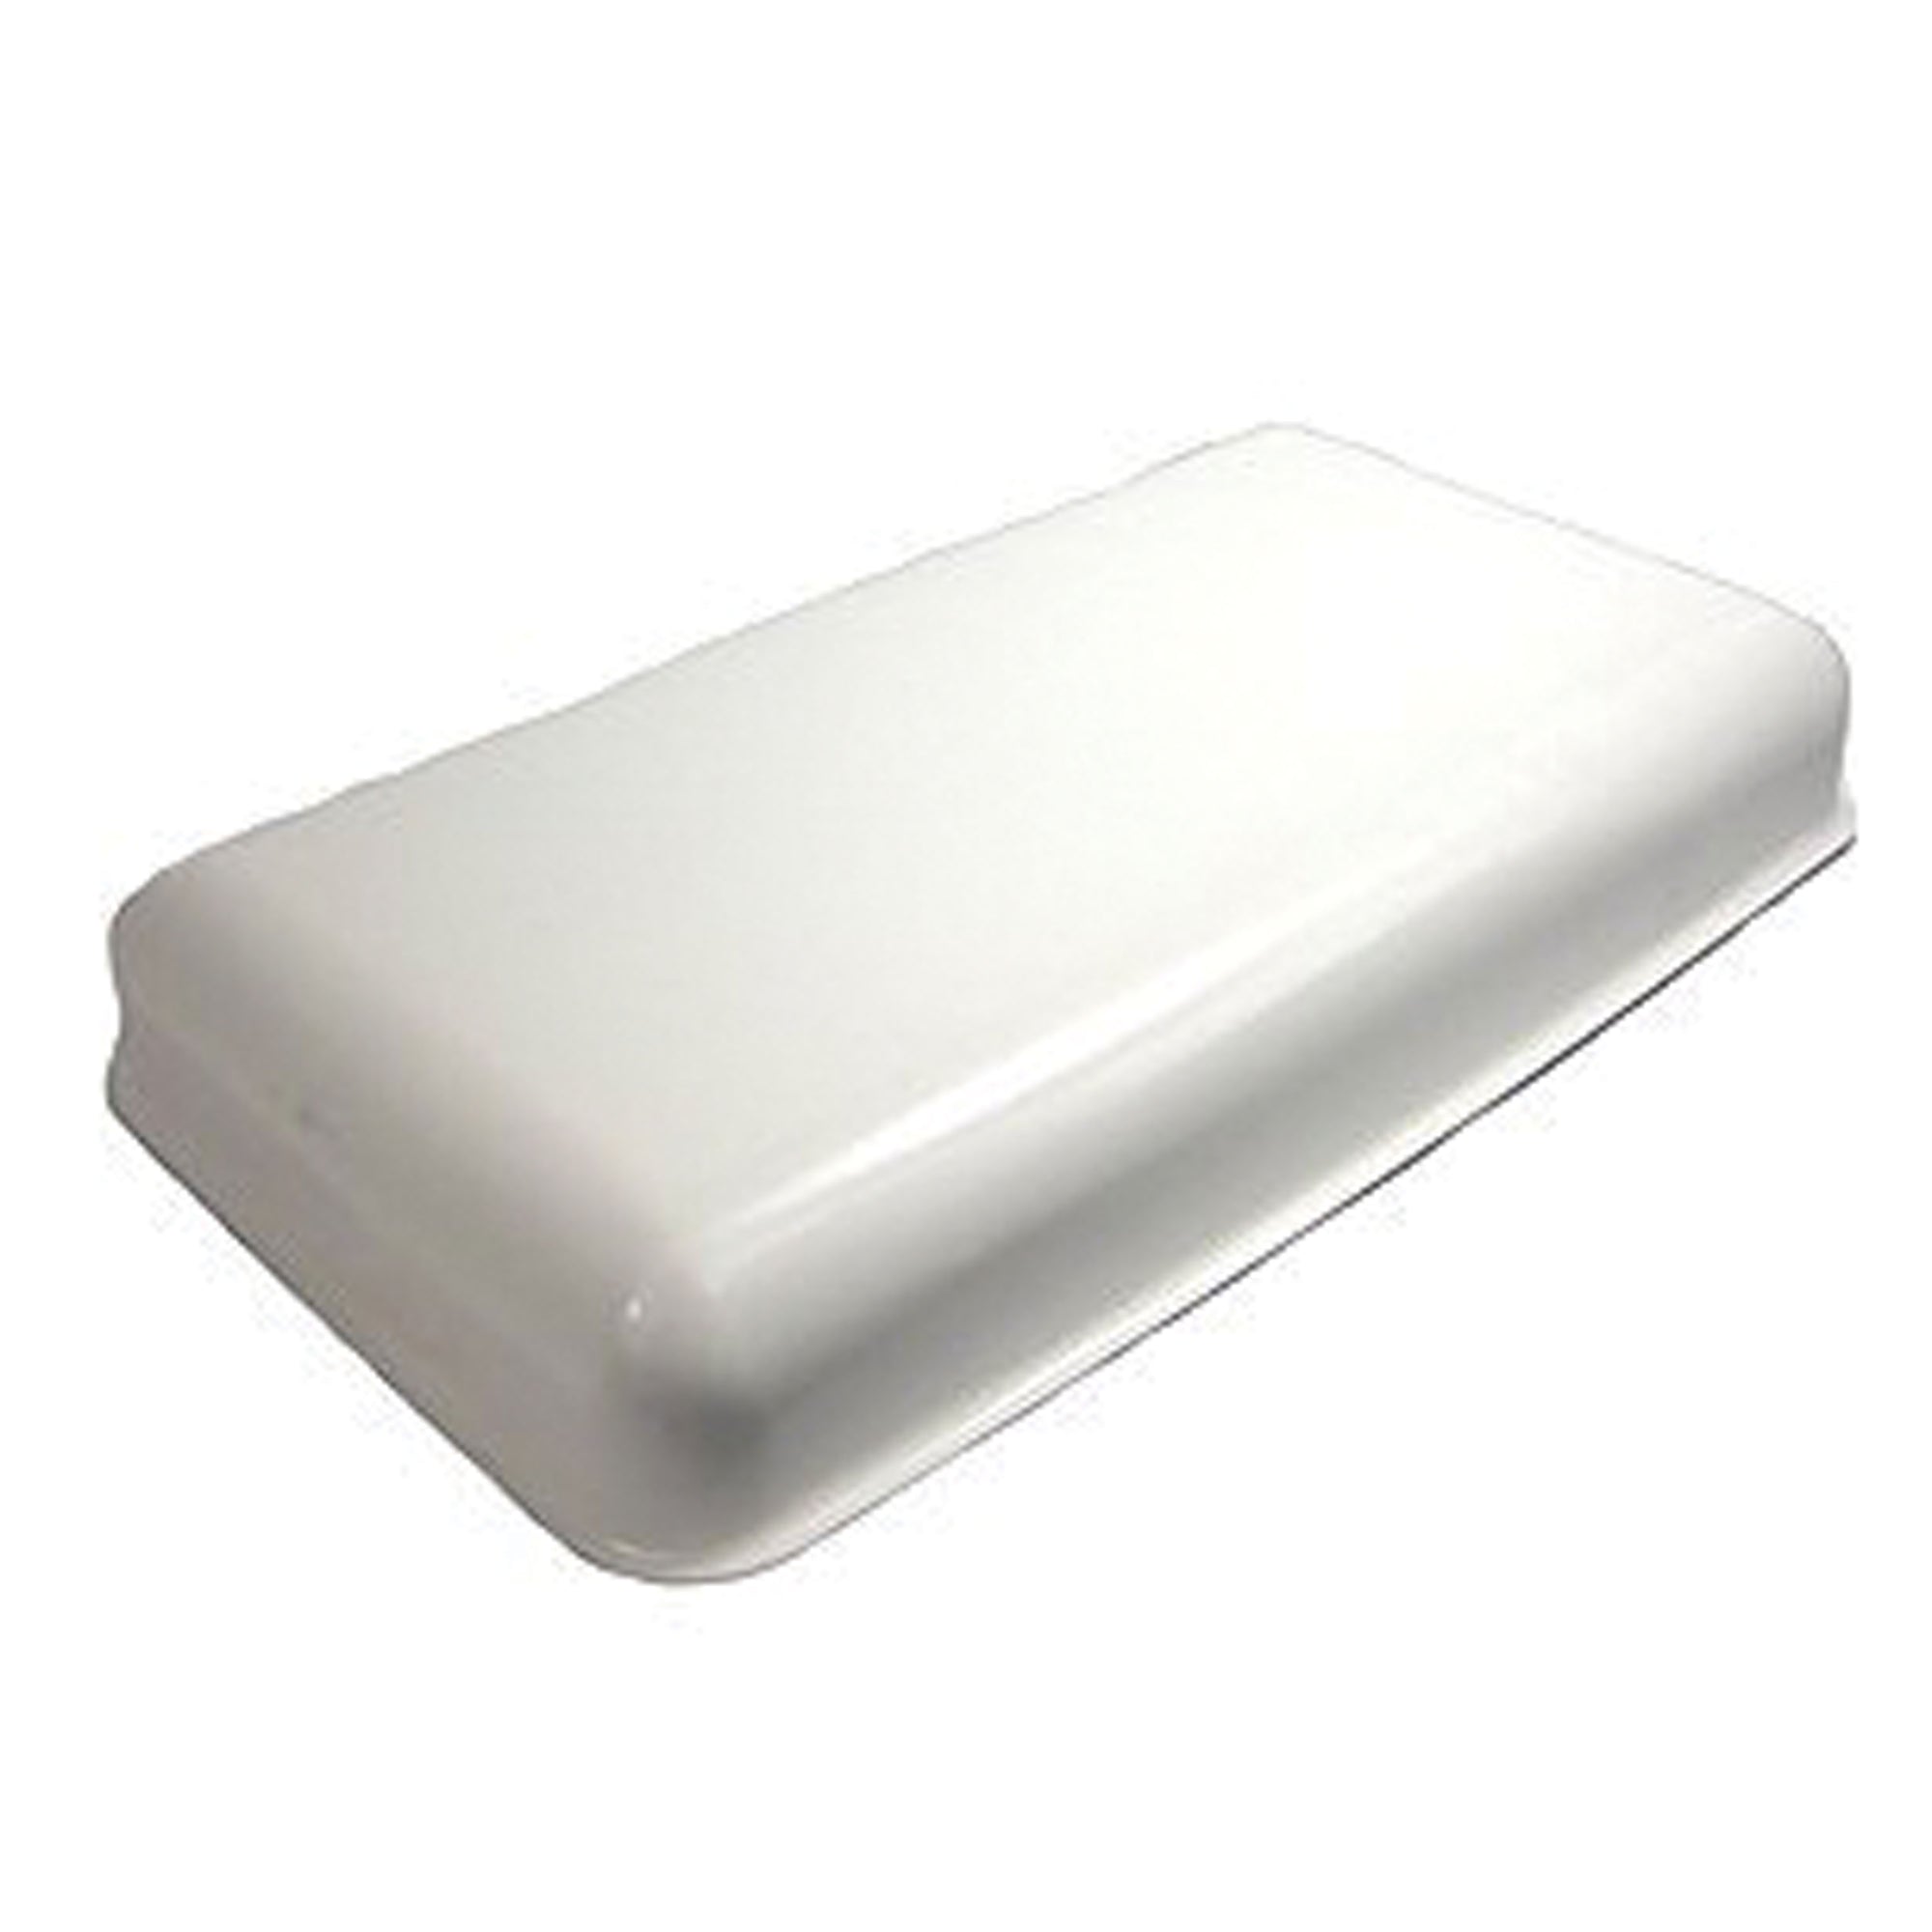 Ventline V0157-03 Refrigerator Roof Vent 5" x 18" - White Replacement Cap